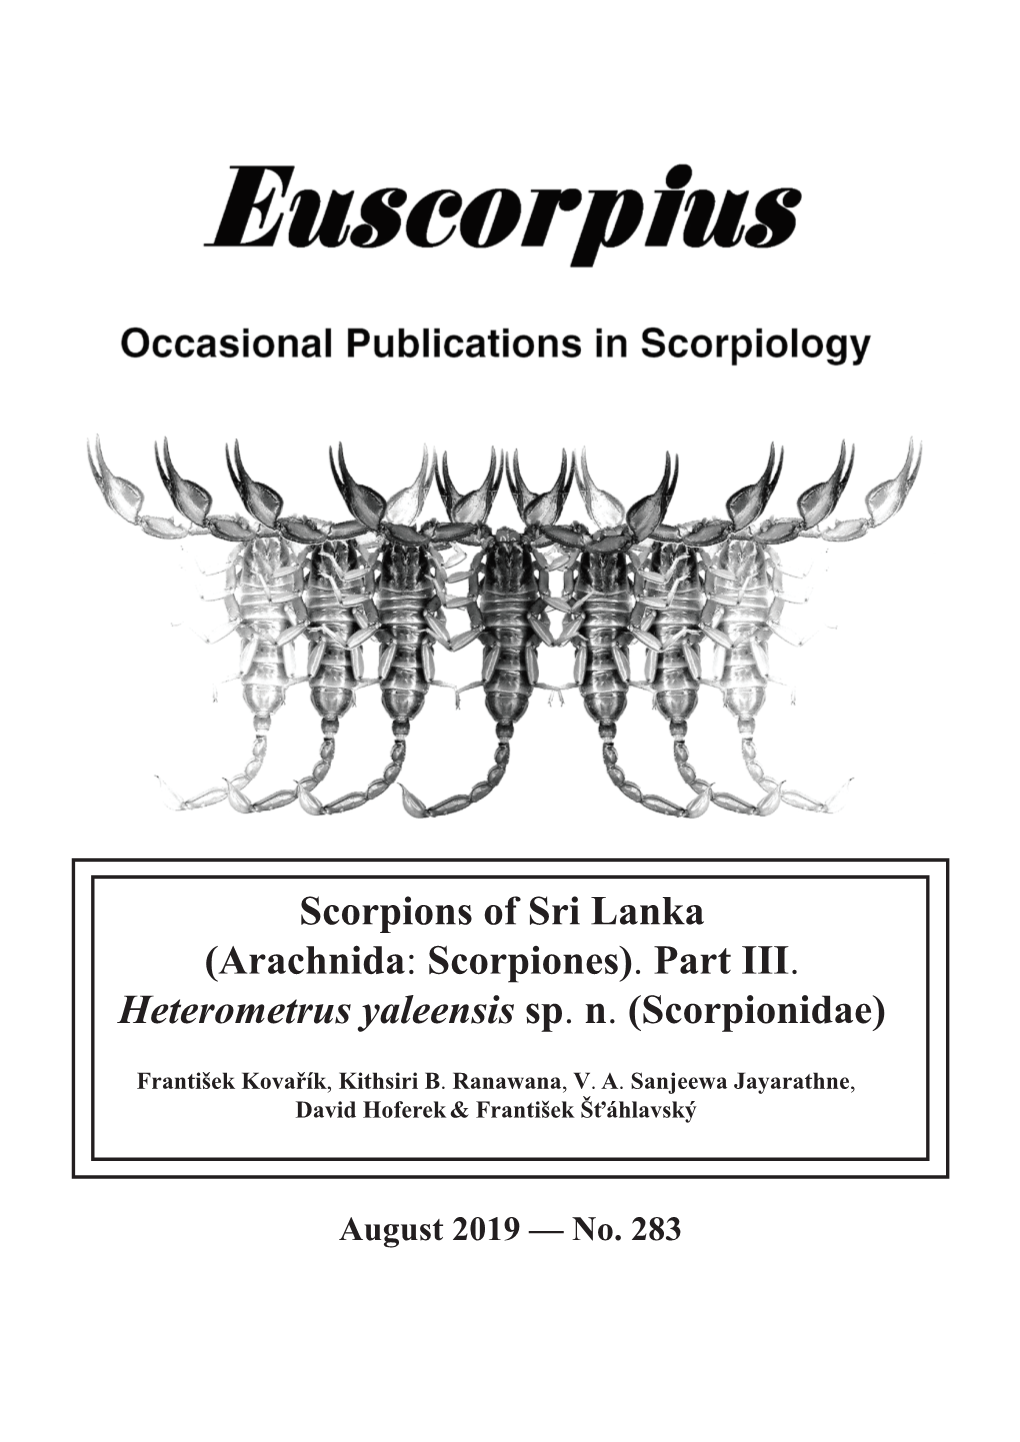 Scorpions of Sri Lanka (Arachnida: Scorpiones). Part III. Heterometrus Yaleensis Sp